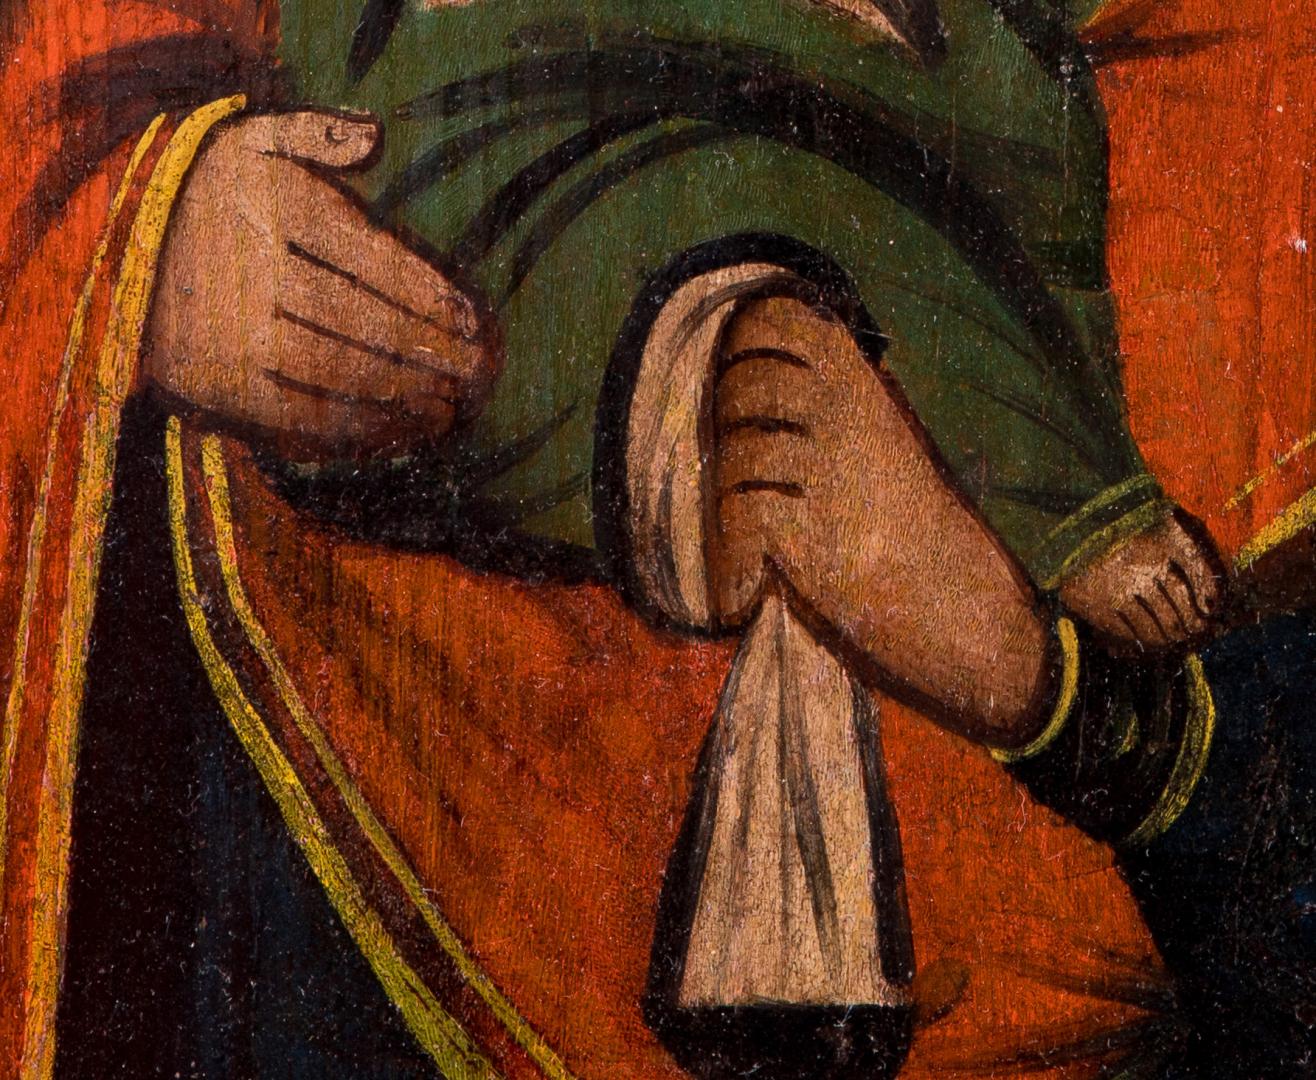 Icon 'Virgin of Pochaiv'